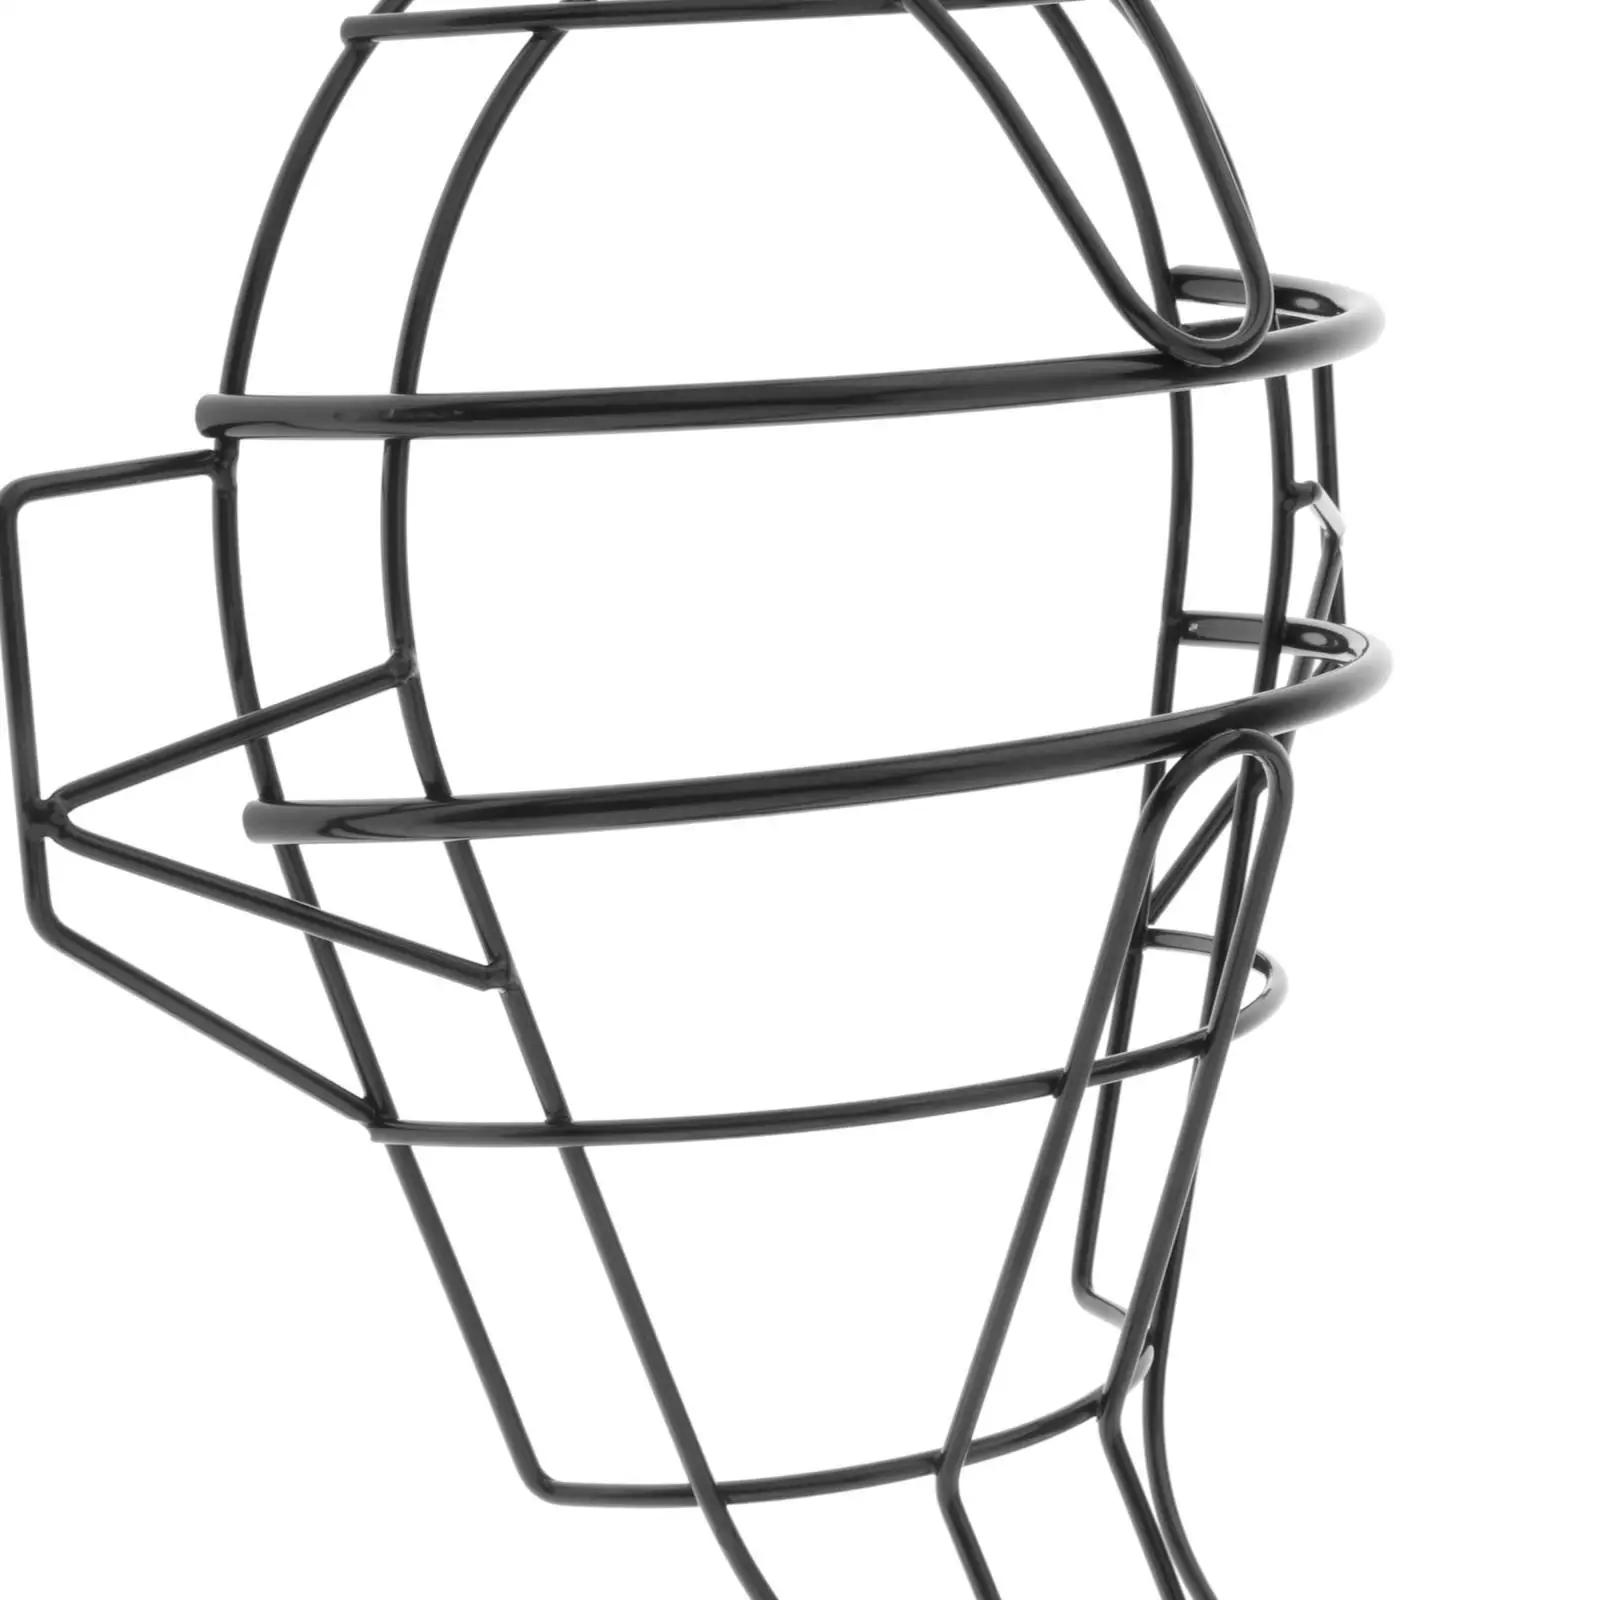 Universal Helmet Face Guard Baseball Softball Protector Junior Ice Hockey